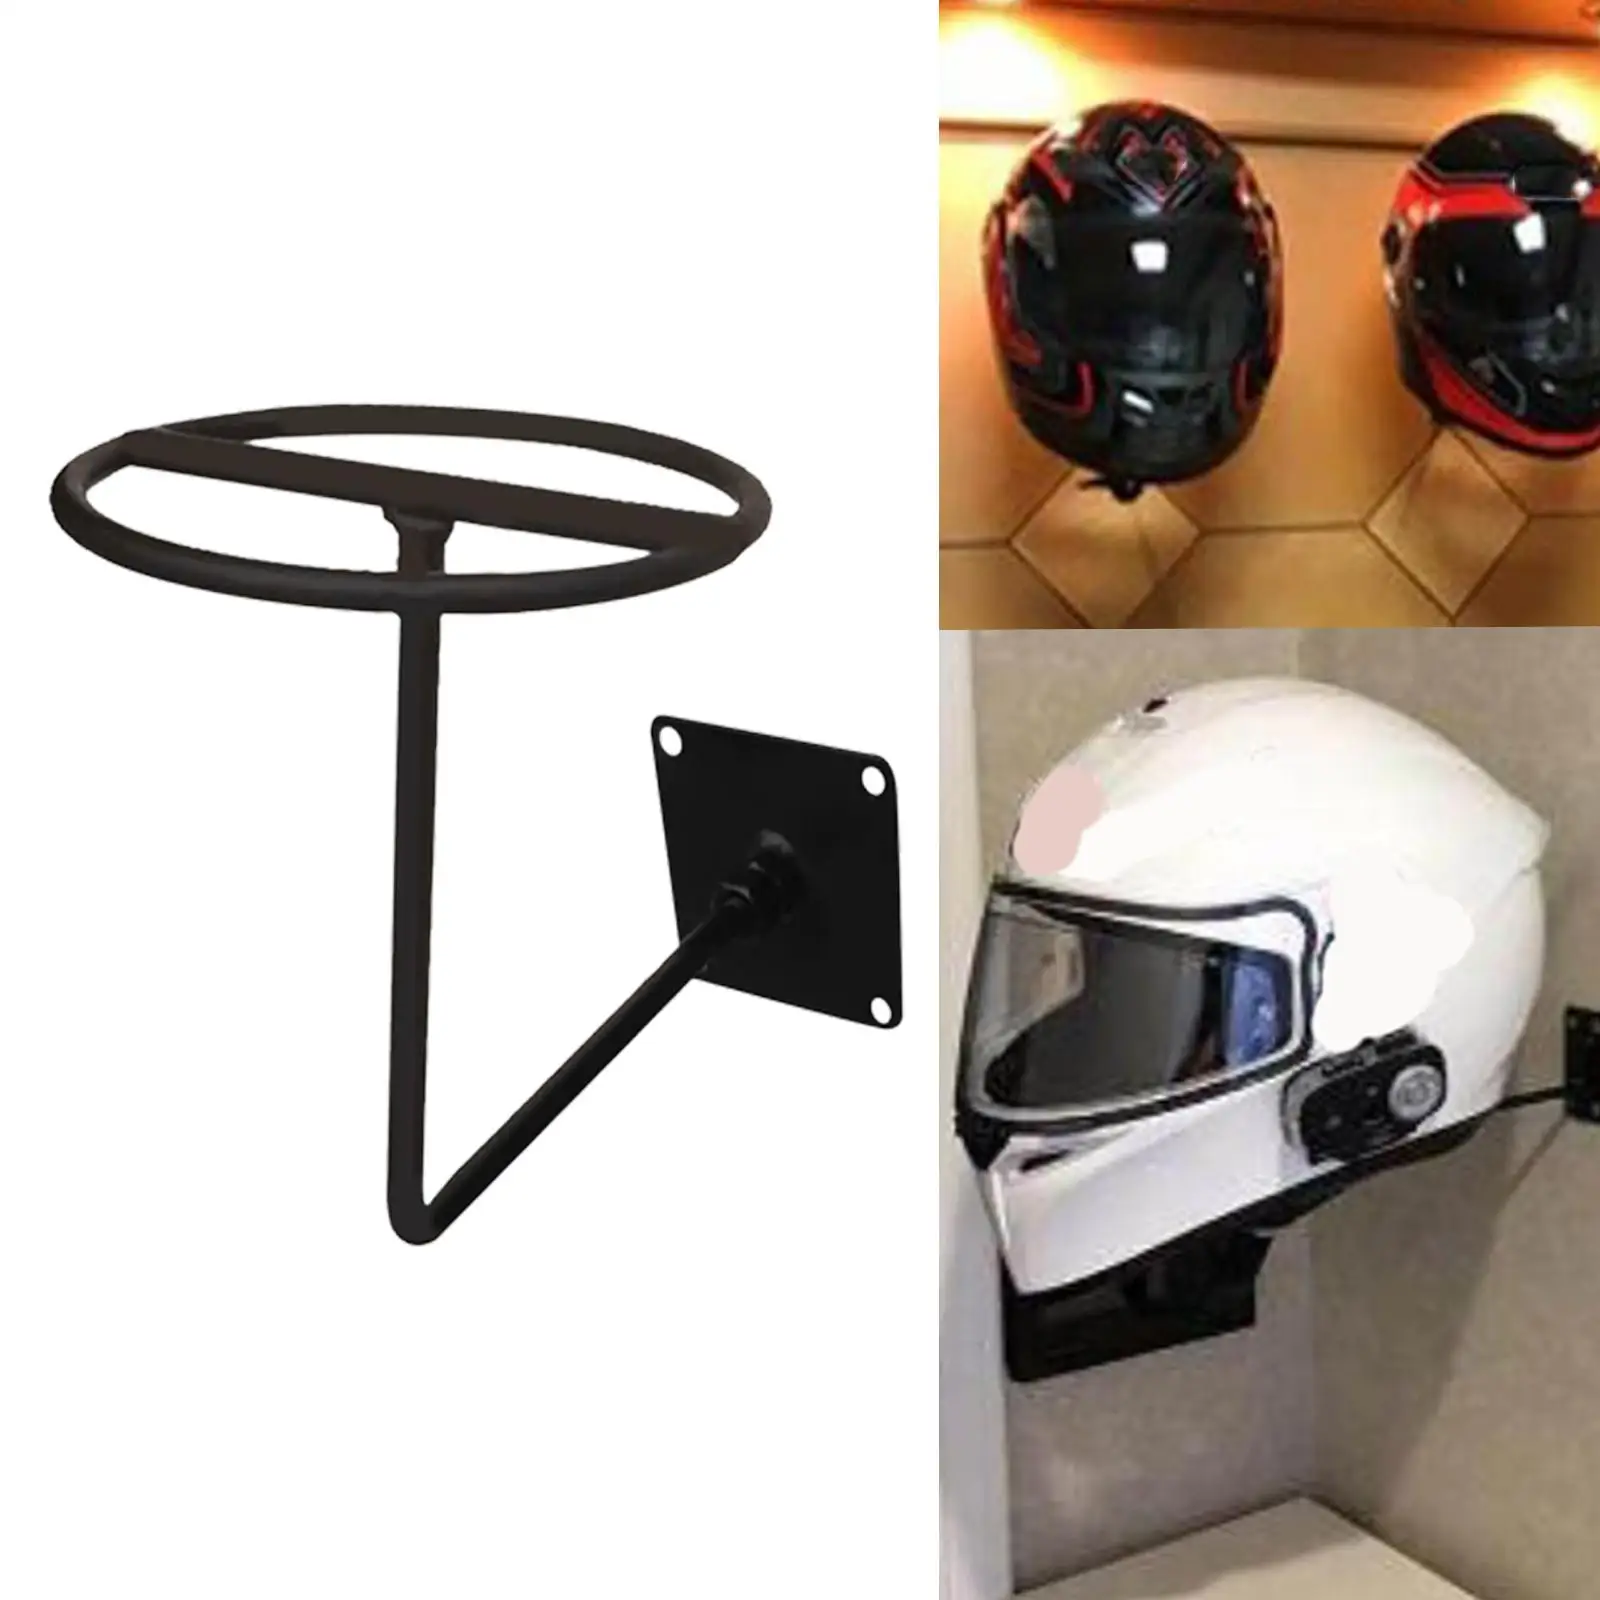 Motorcycle Helmet Holder Storage Multifunctional Wall Mounted Metal Hook Stand Rack Fits for Coats Caps Jacket Hats Garage